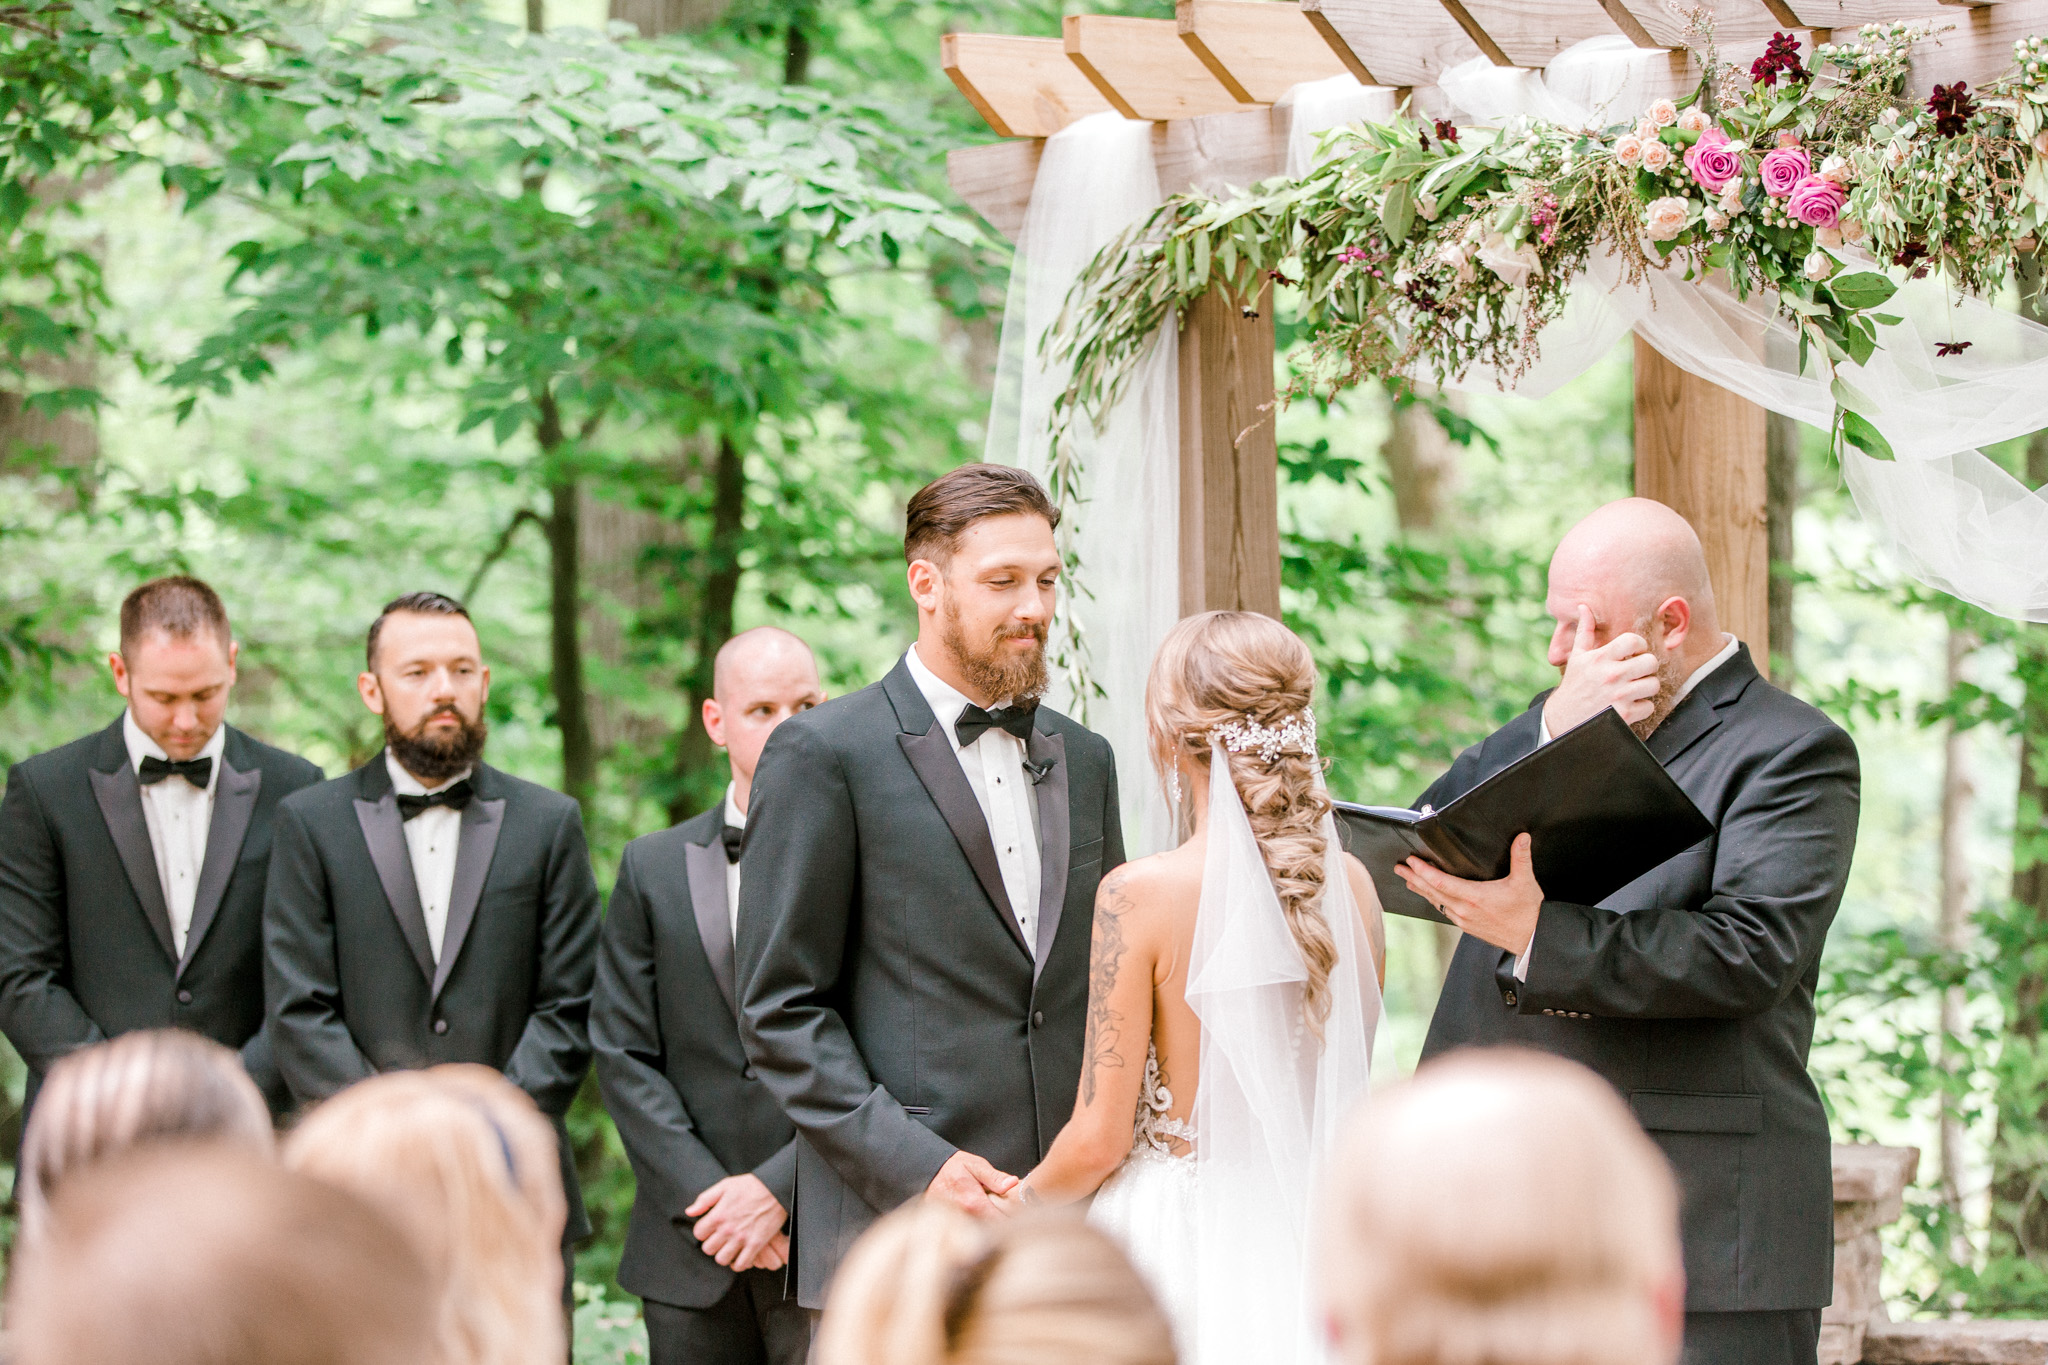 Fairytale Wedding In the Woods | Beauty and the Beast themed Wedding | Barn Wedding Reception | Low Back Wedding Dress | Light & Airy Wedding Photography | West Michigan Wedding Photographer